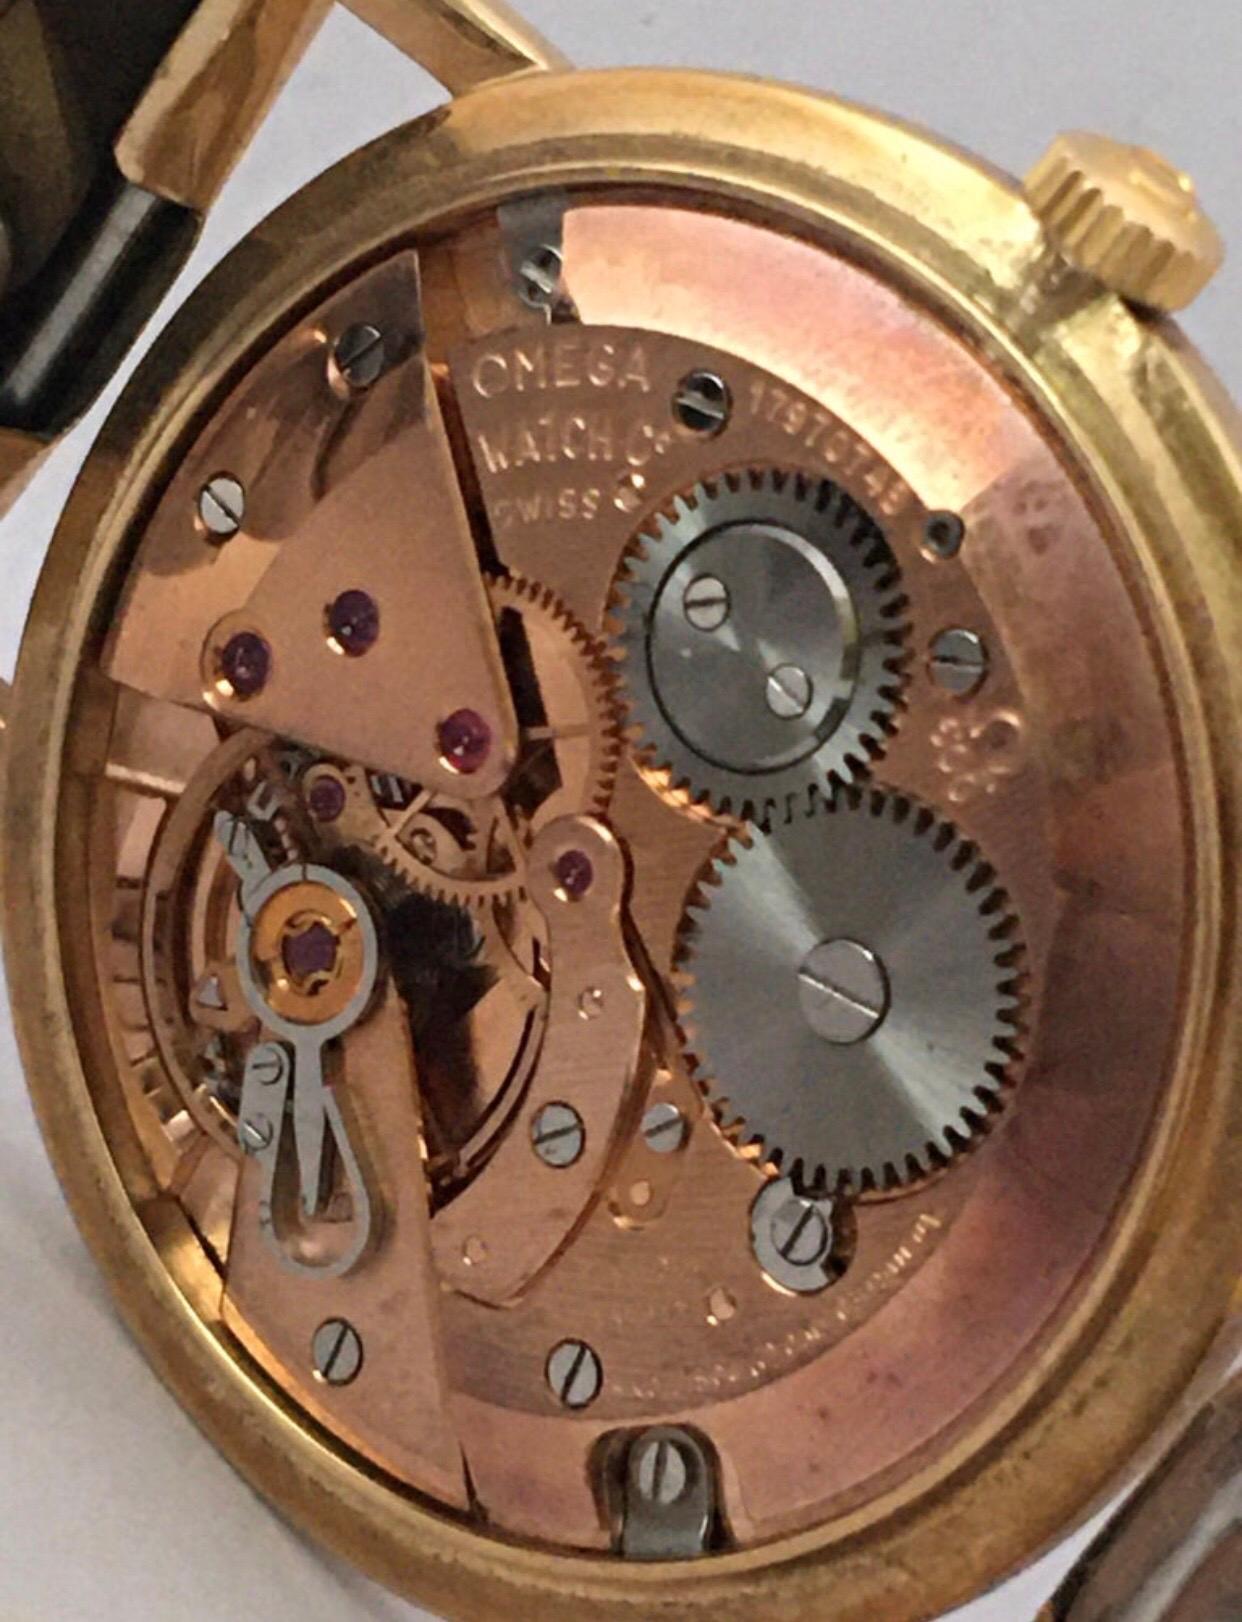 9 Karat Gold and Rolled Gold Bracelet 1960s Omega Mechanical Watch For Sale 4